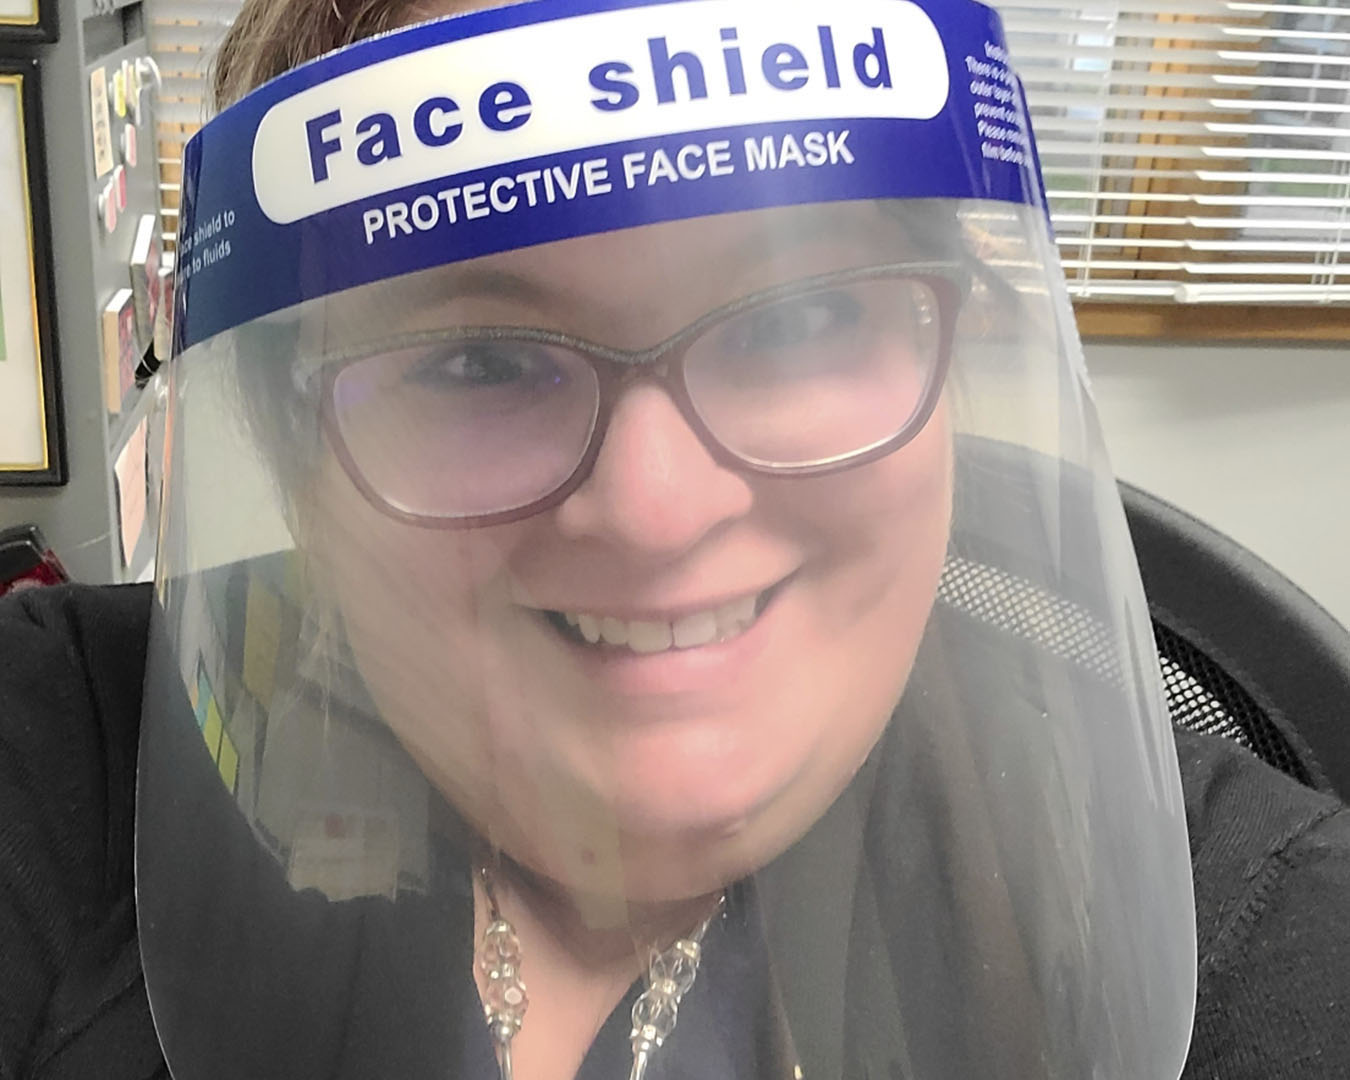 Teacher wearing a faceshield